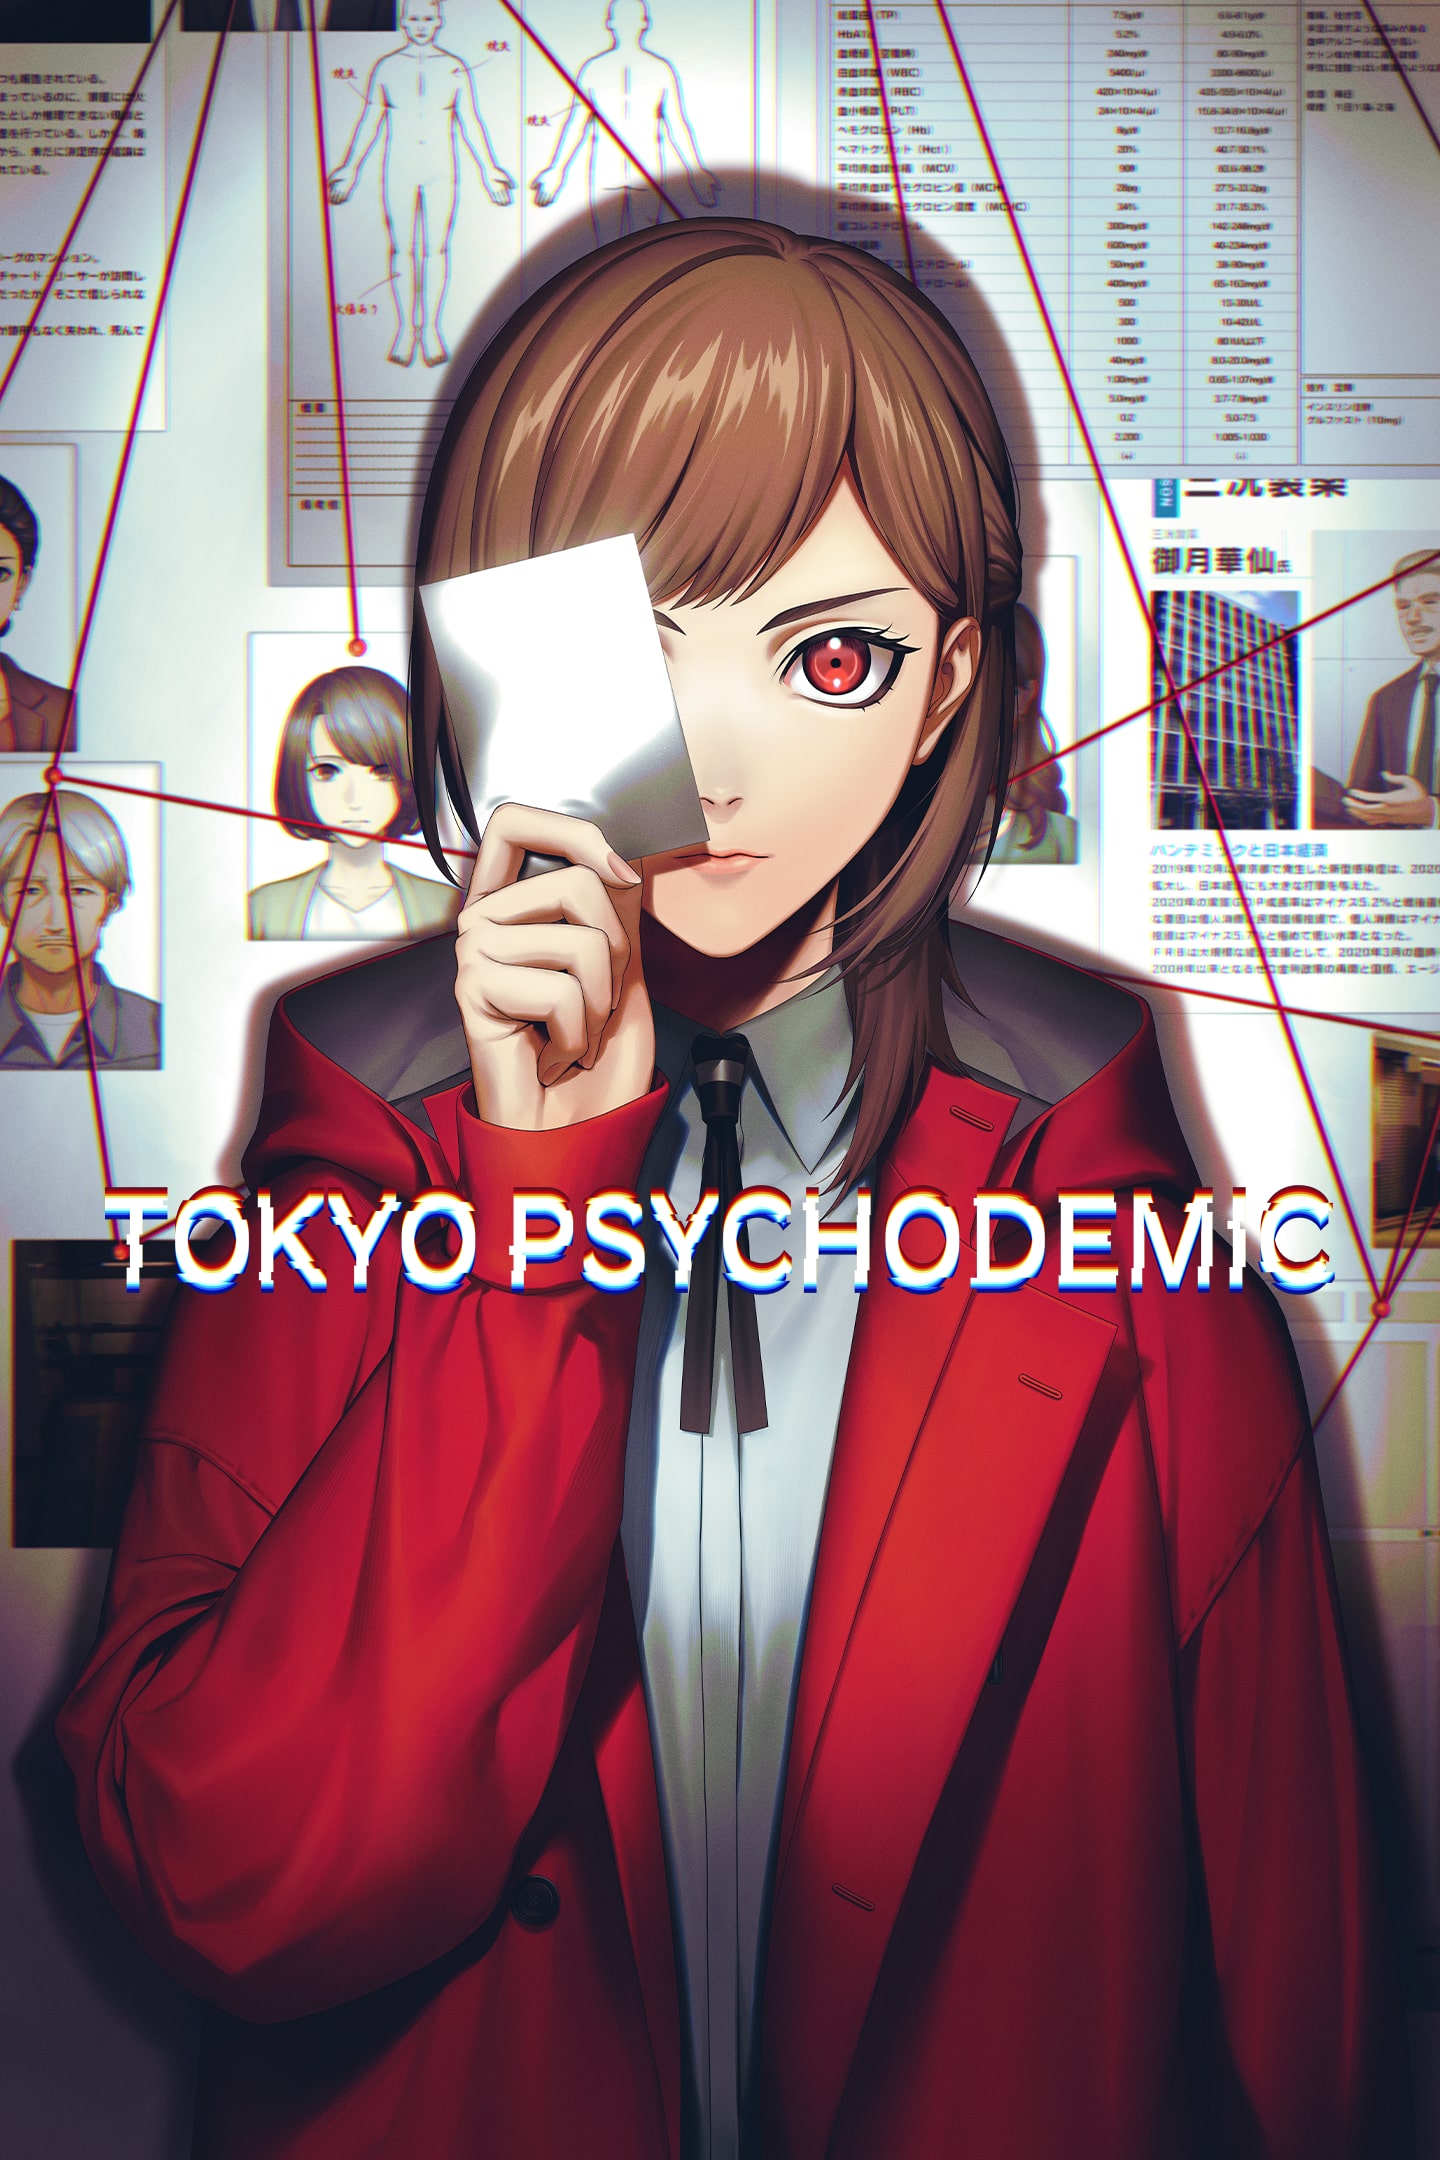 TOKYO PSYCHODEMIC DEMO